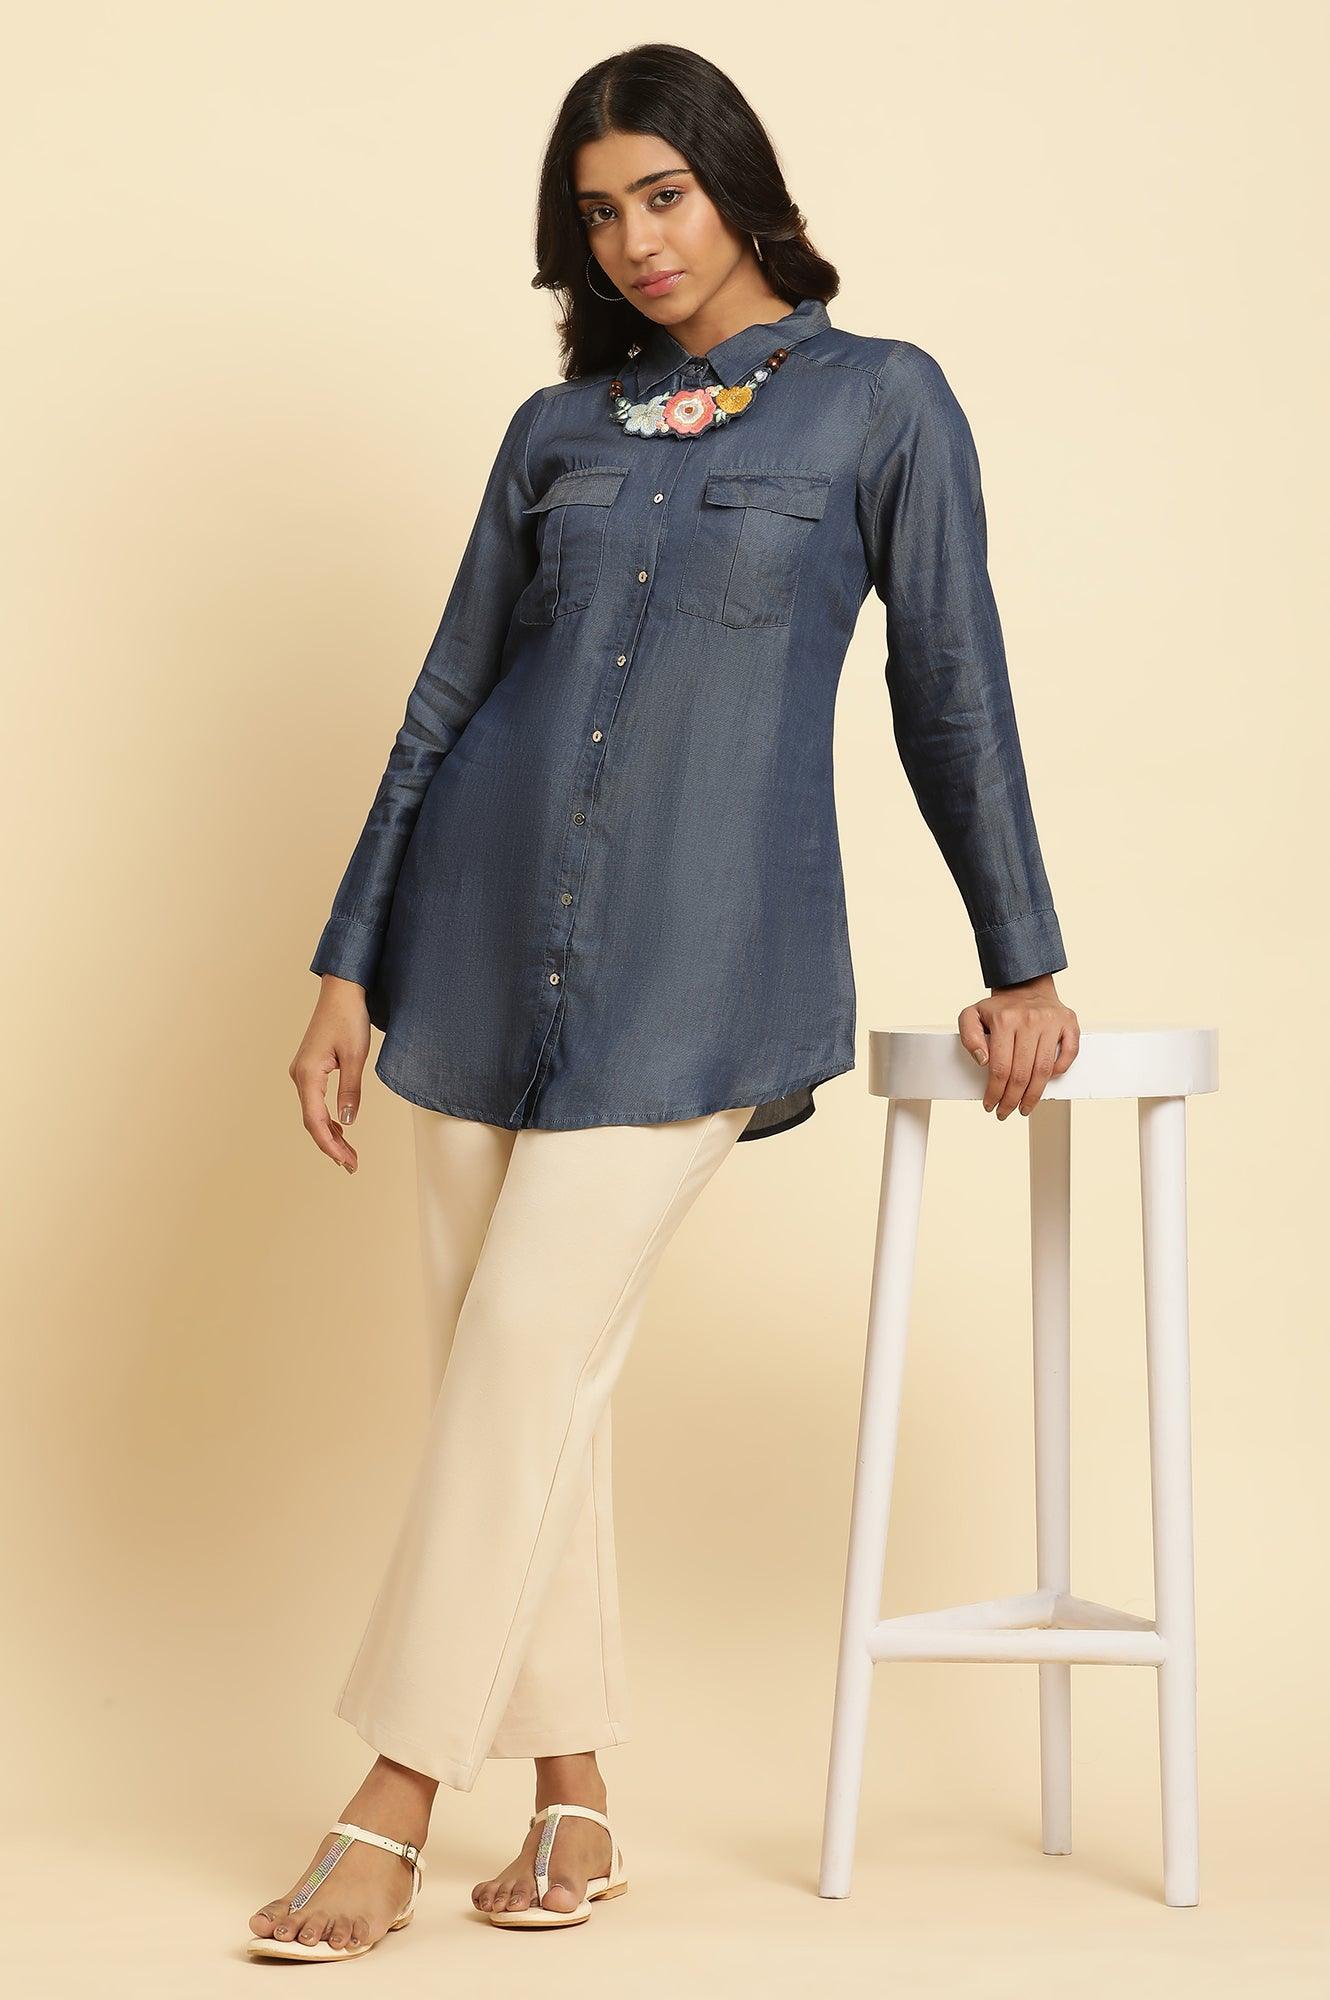 Blue Denim Western Shirt With Embroidered Neck Piece - wforwoman